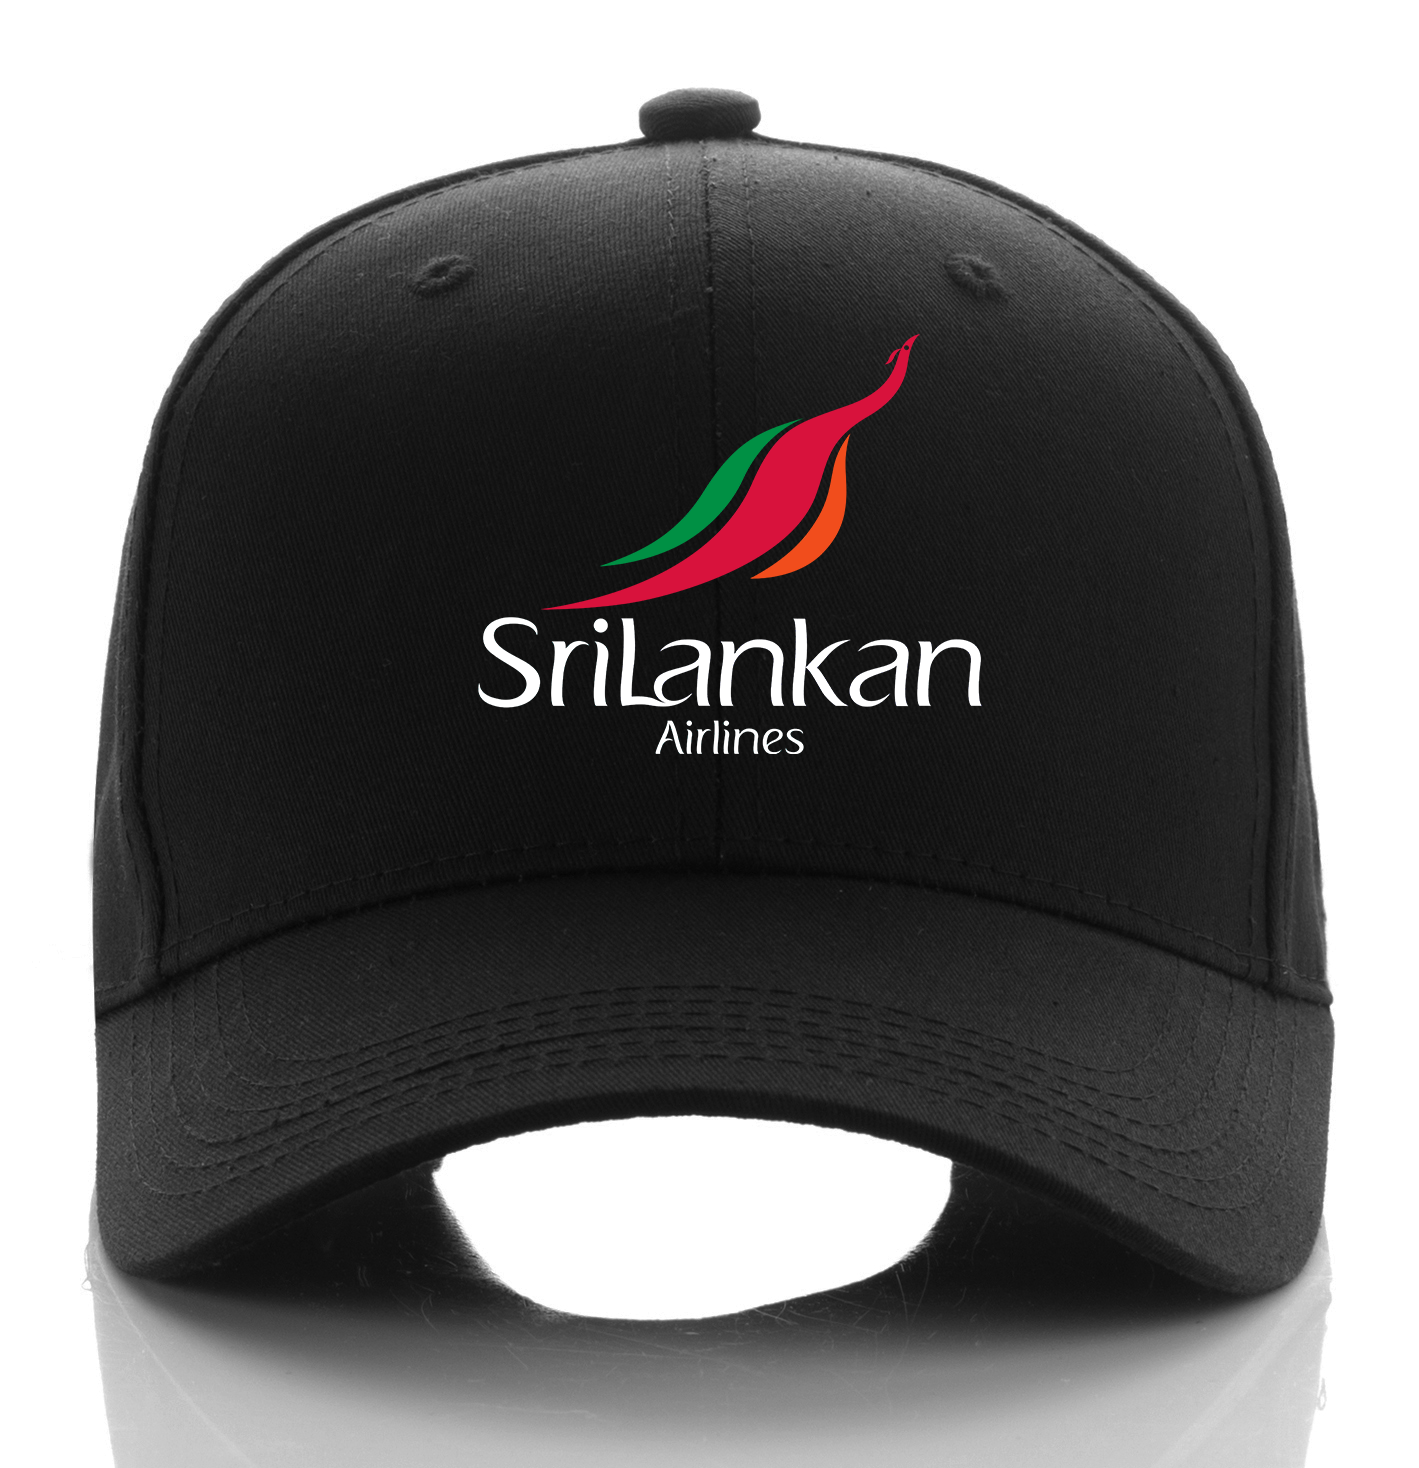 SriLankan Airlines codeshares with Korean Air